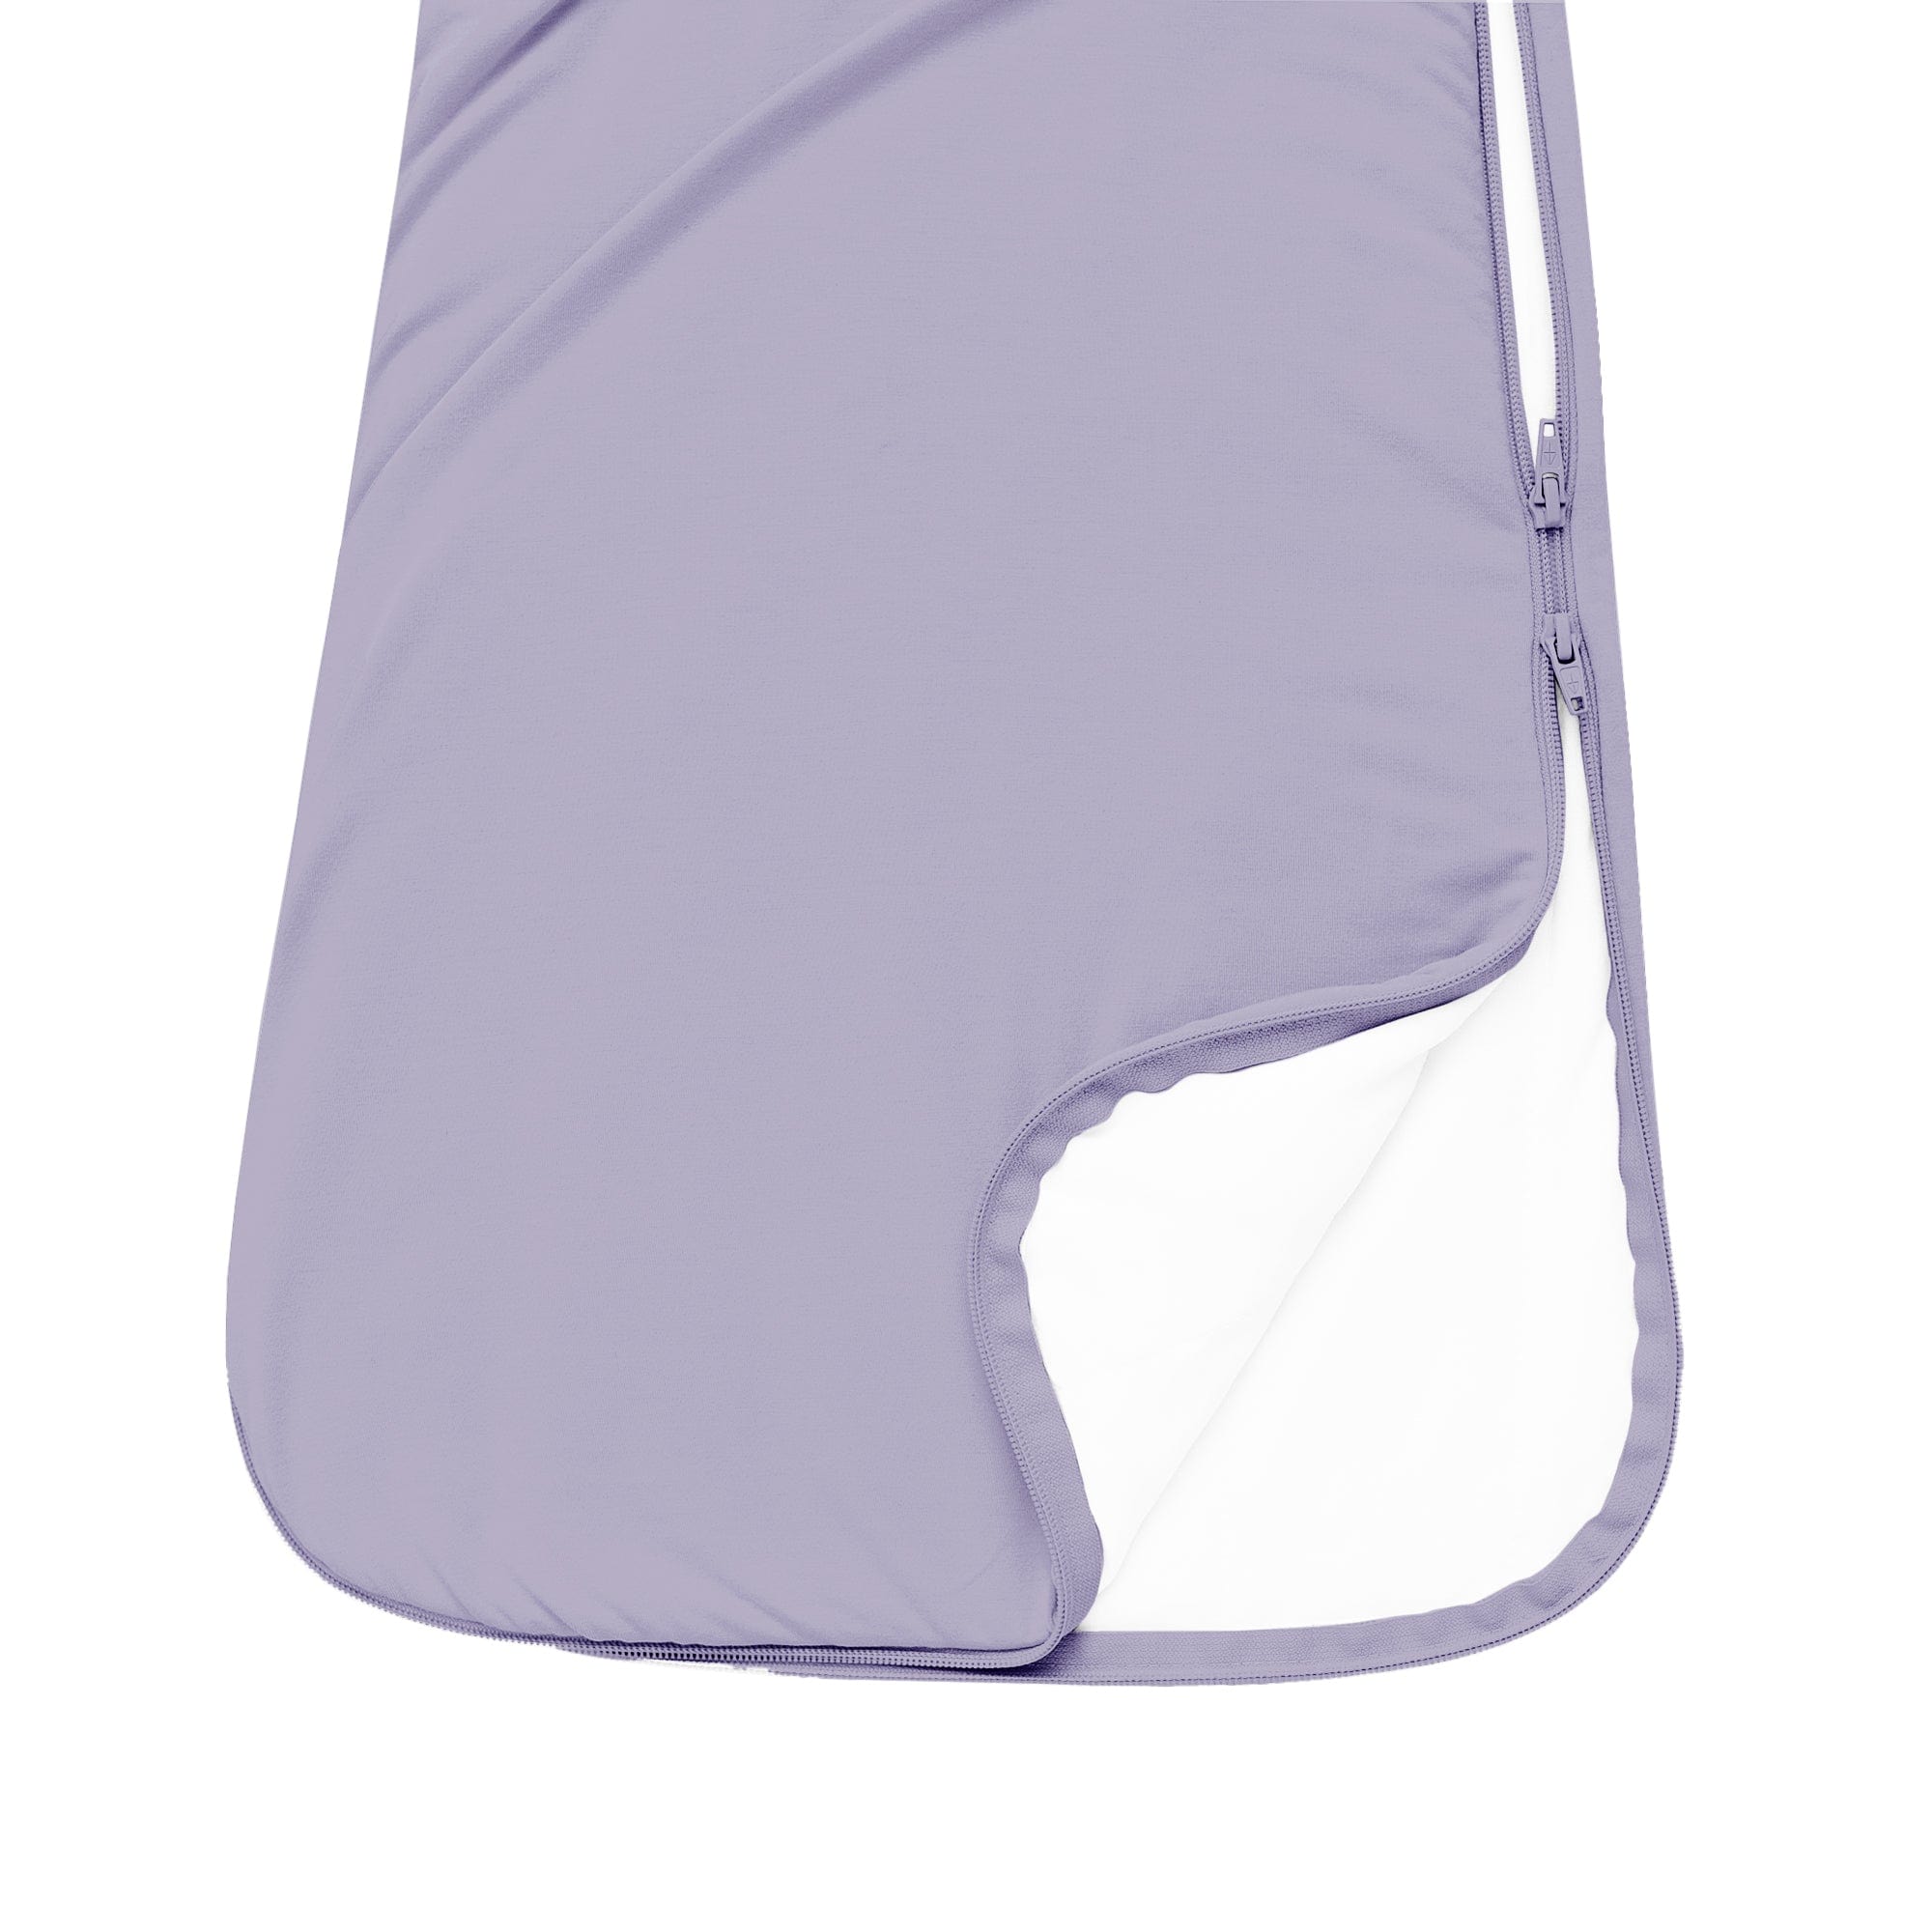 Kyte Baby bamboo Sleep Bag in Taro 1.0 double zipper